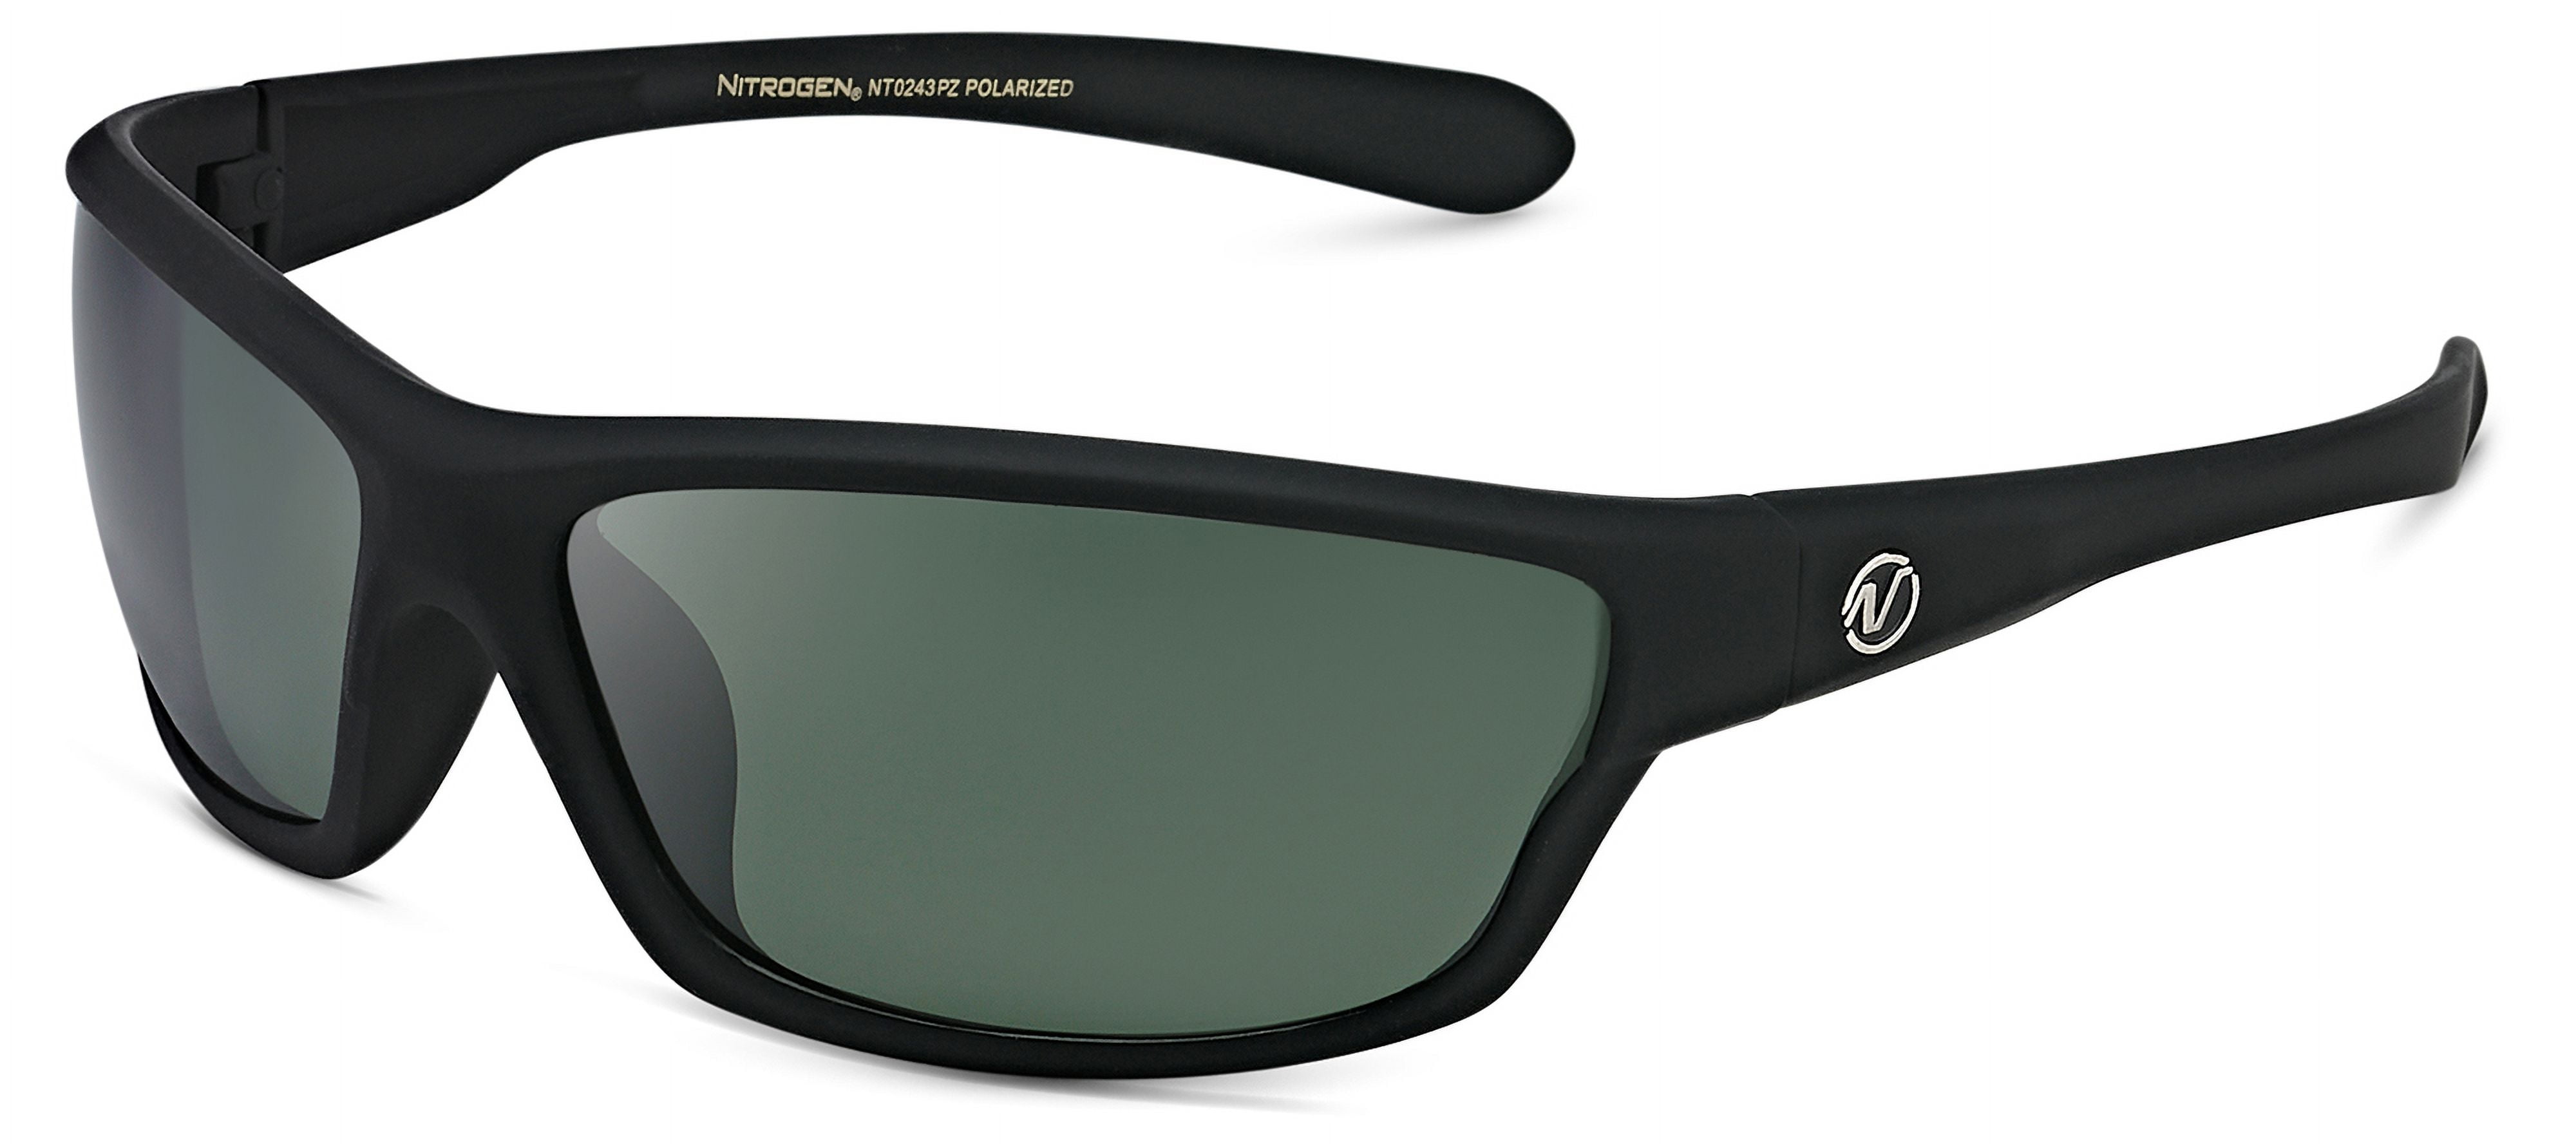 Polarized Wrap Around Sport Sunglasses for Men Women - Driving Fishing  Running Cycling Baseball Softball Golf Wraparound Sports Shades Sun Glasses  